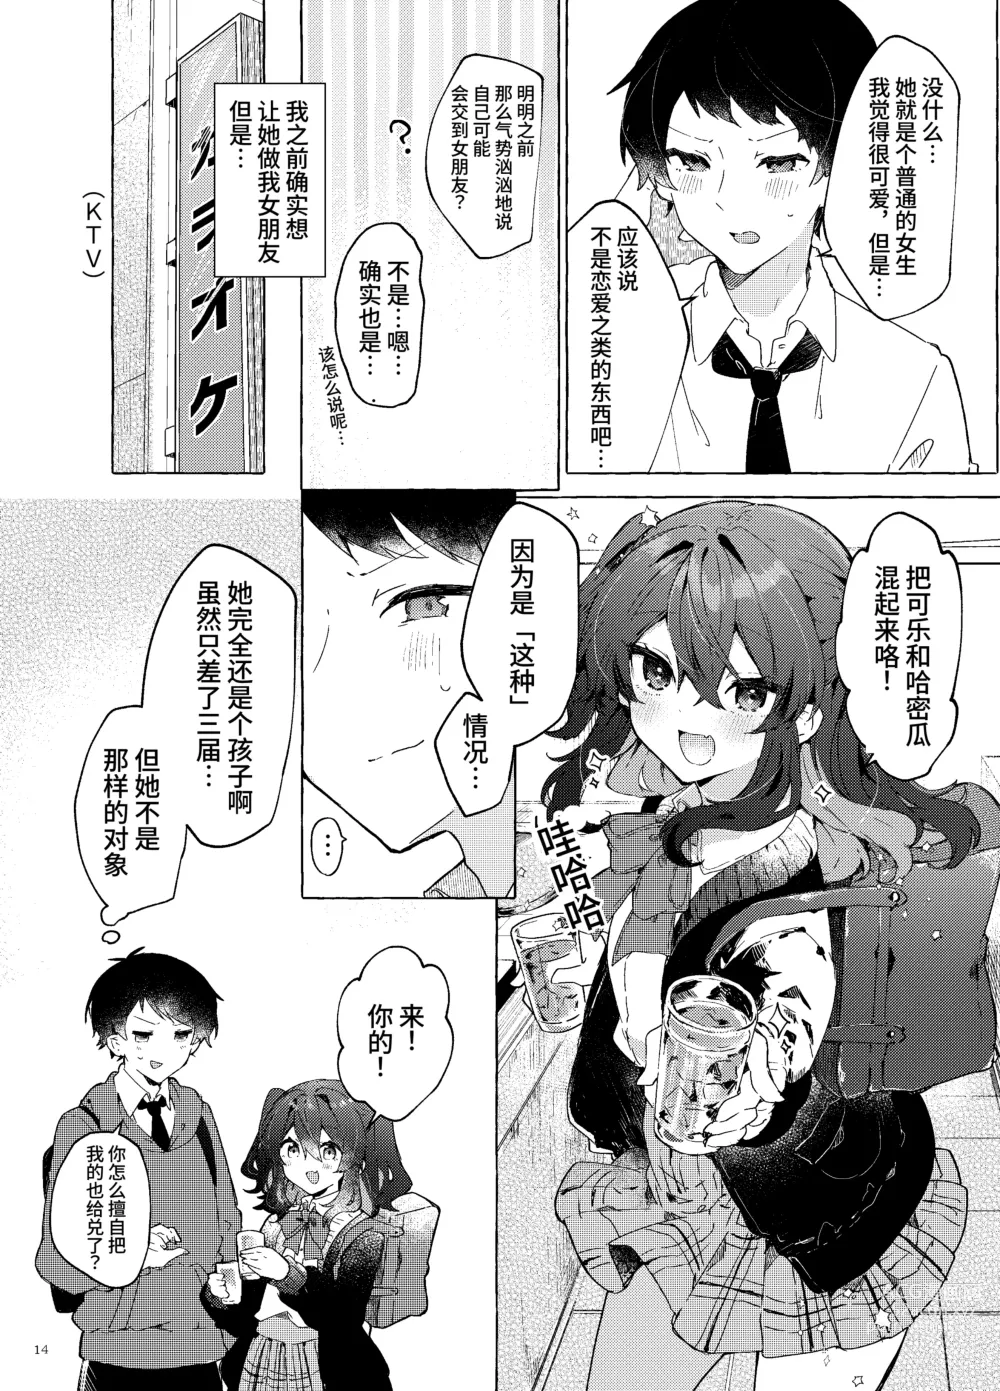 Page 15 of doujinshi Koi to Mahou to Etcetera - Love, Magic, and etc.